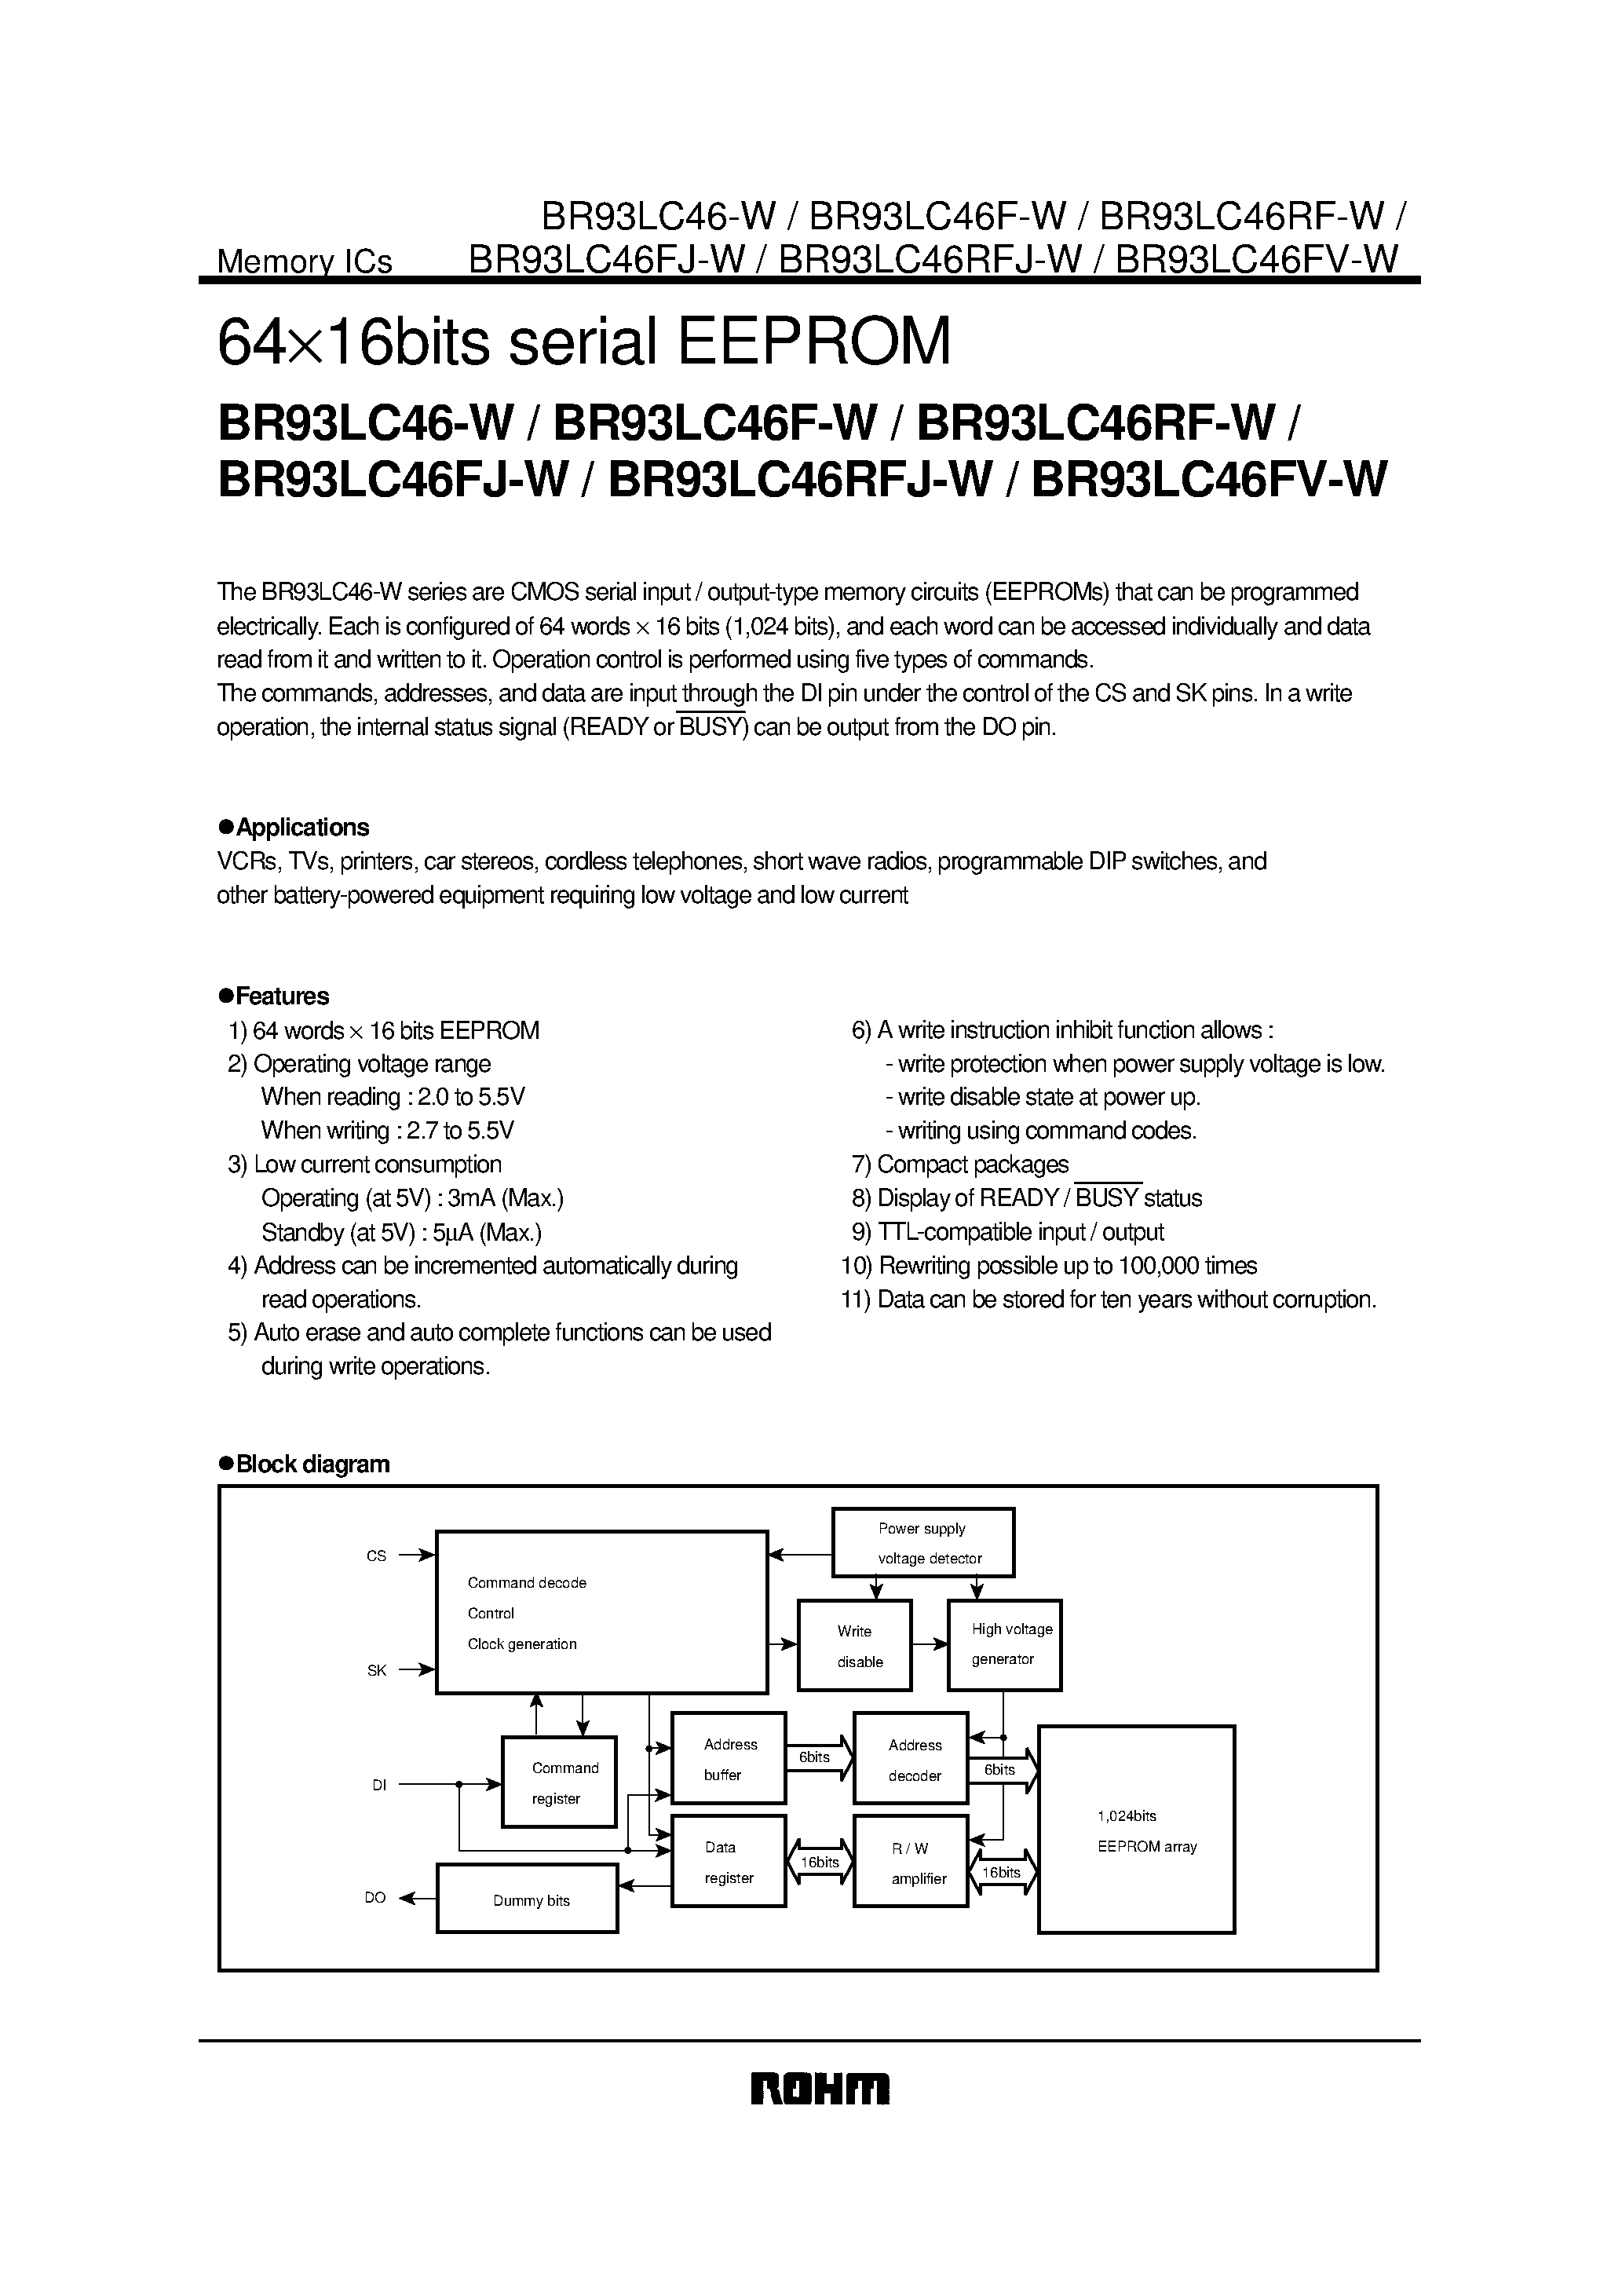 Datasheet BR93LC46RFJ-W - 6416bits serial EEPROM page 1